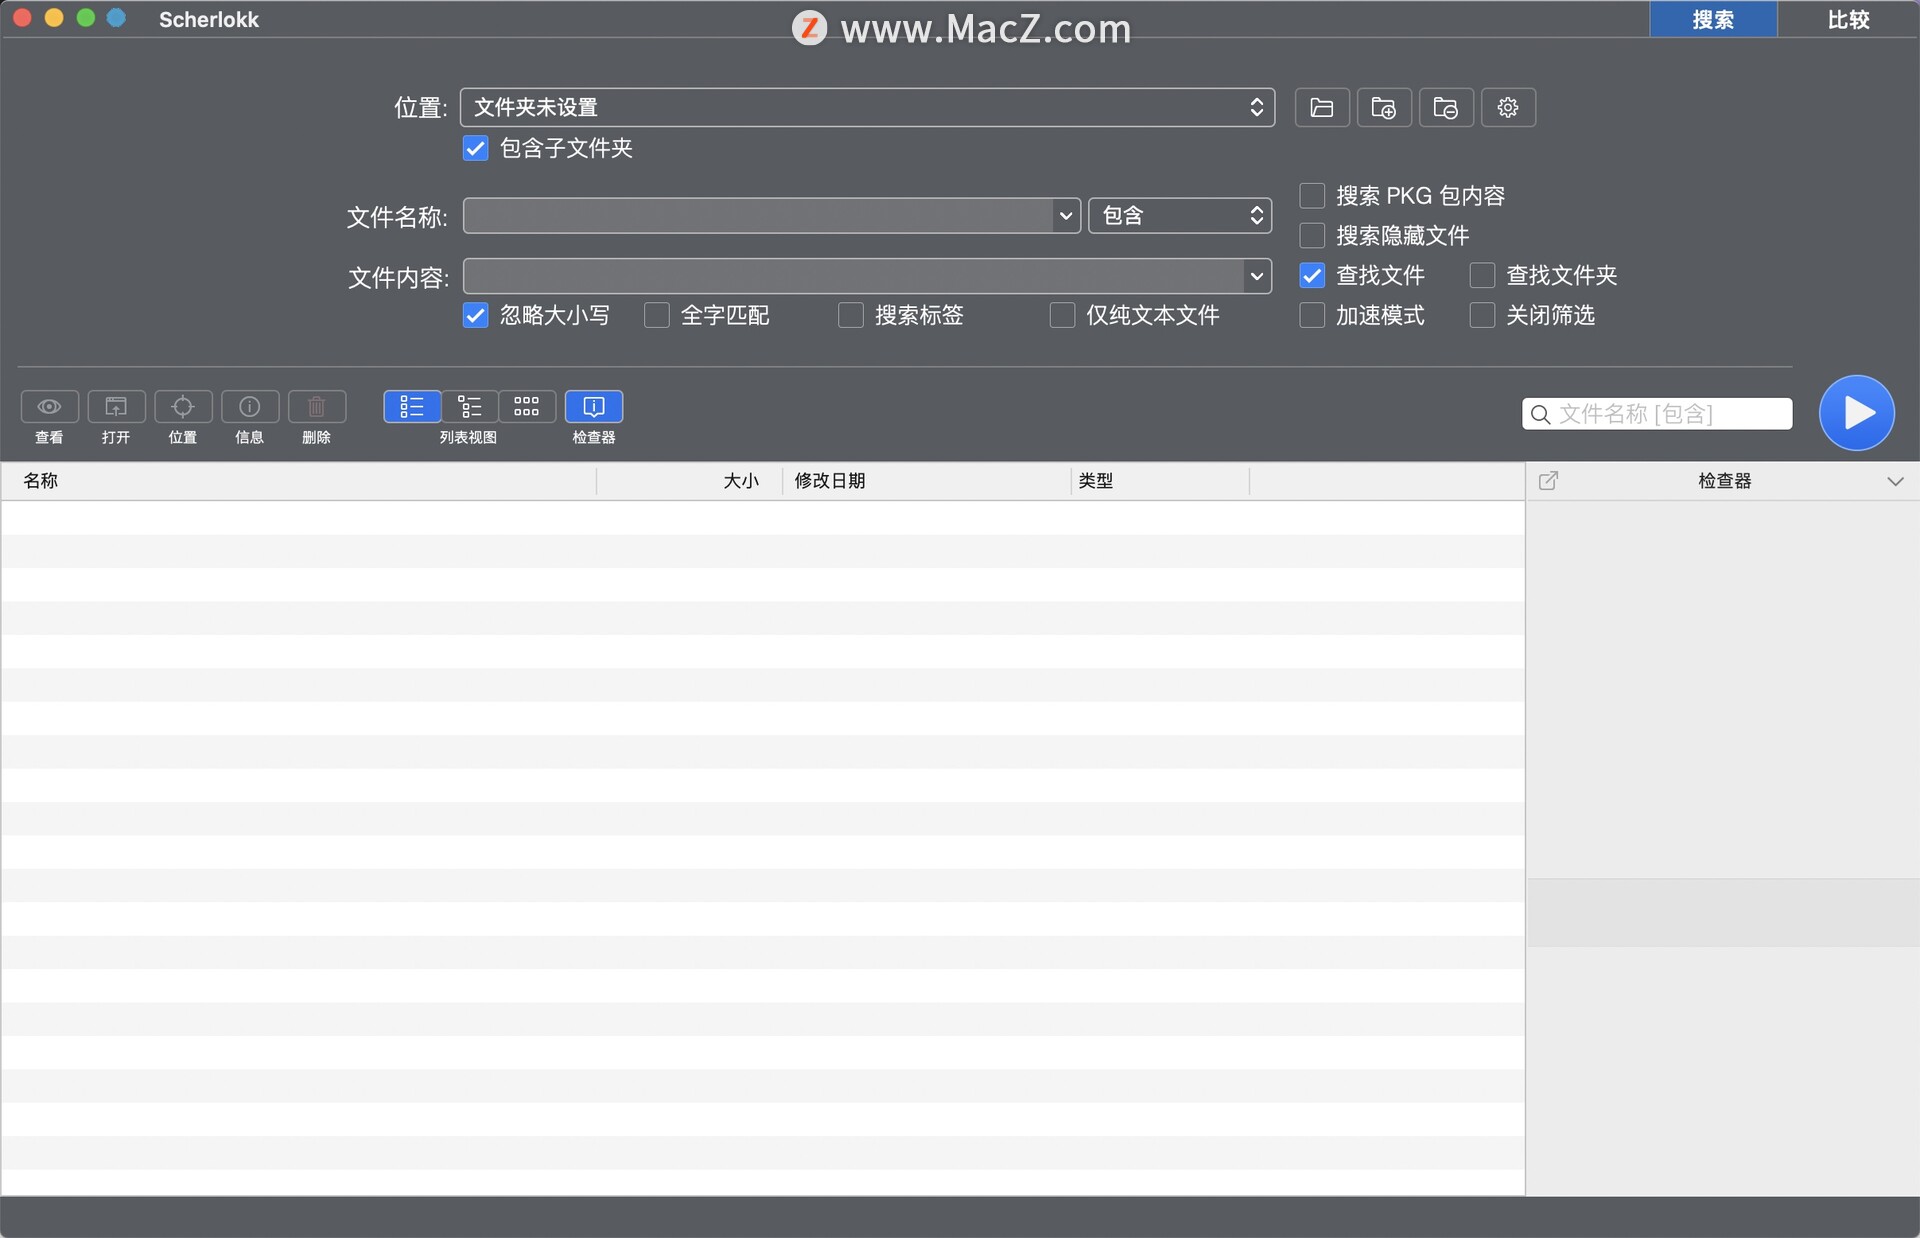 Scherlokk for Mac(文件搜索软件)4.5.45007中文版 - 图1